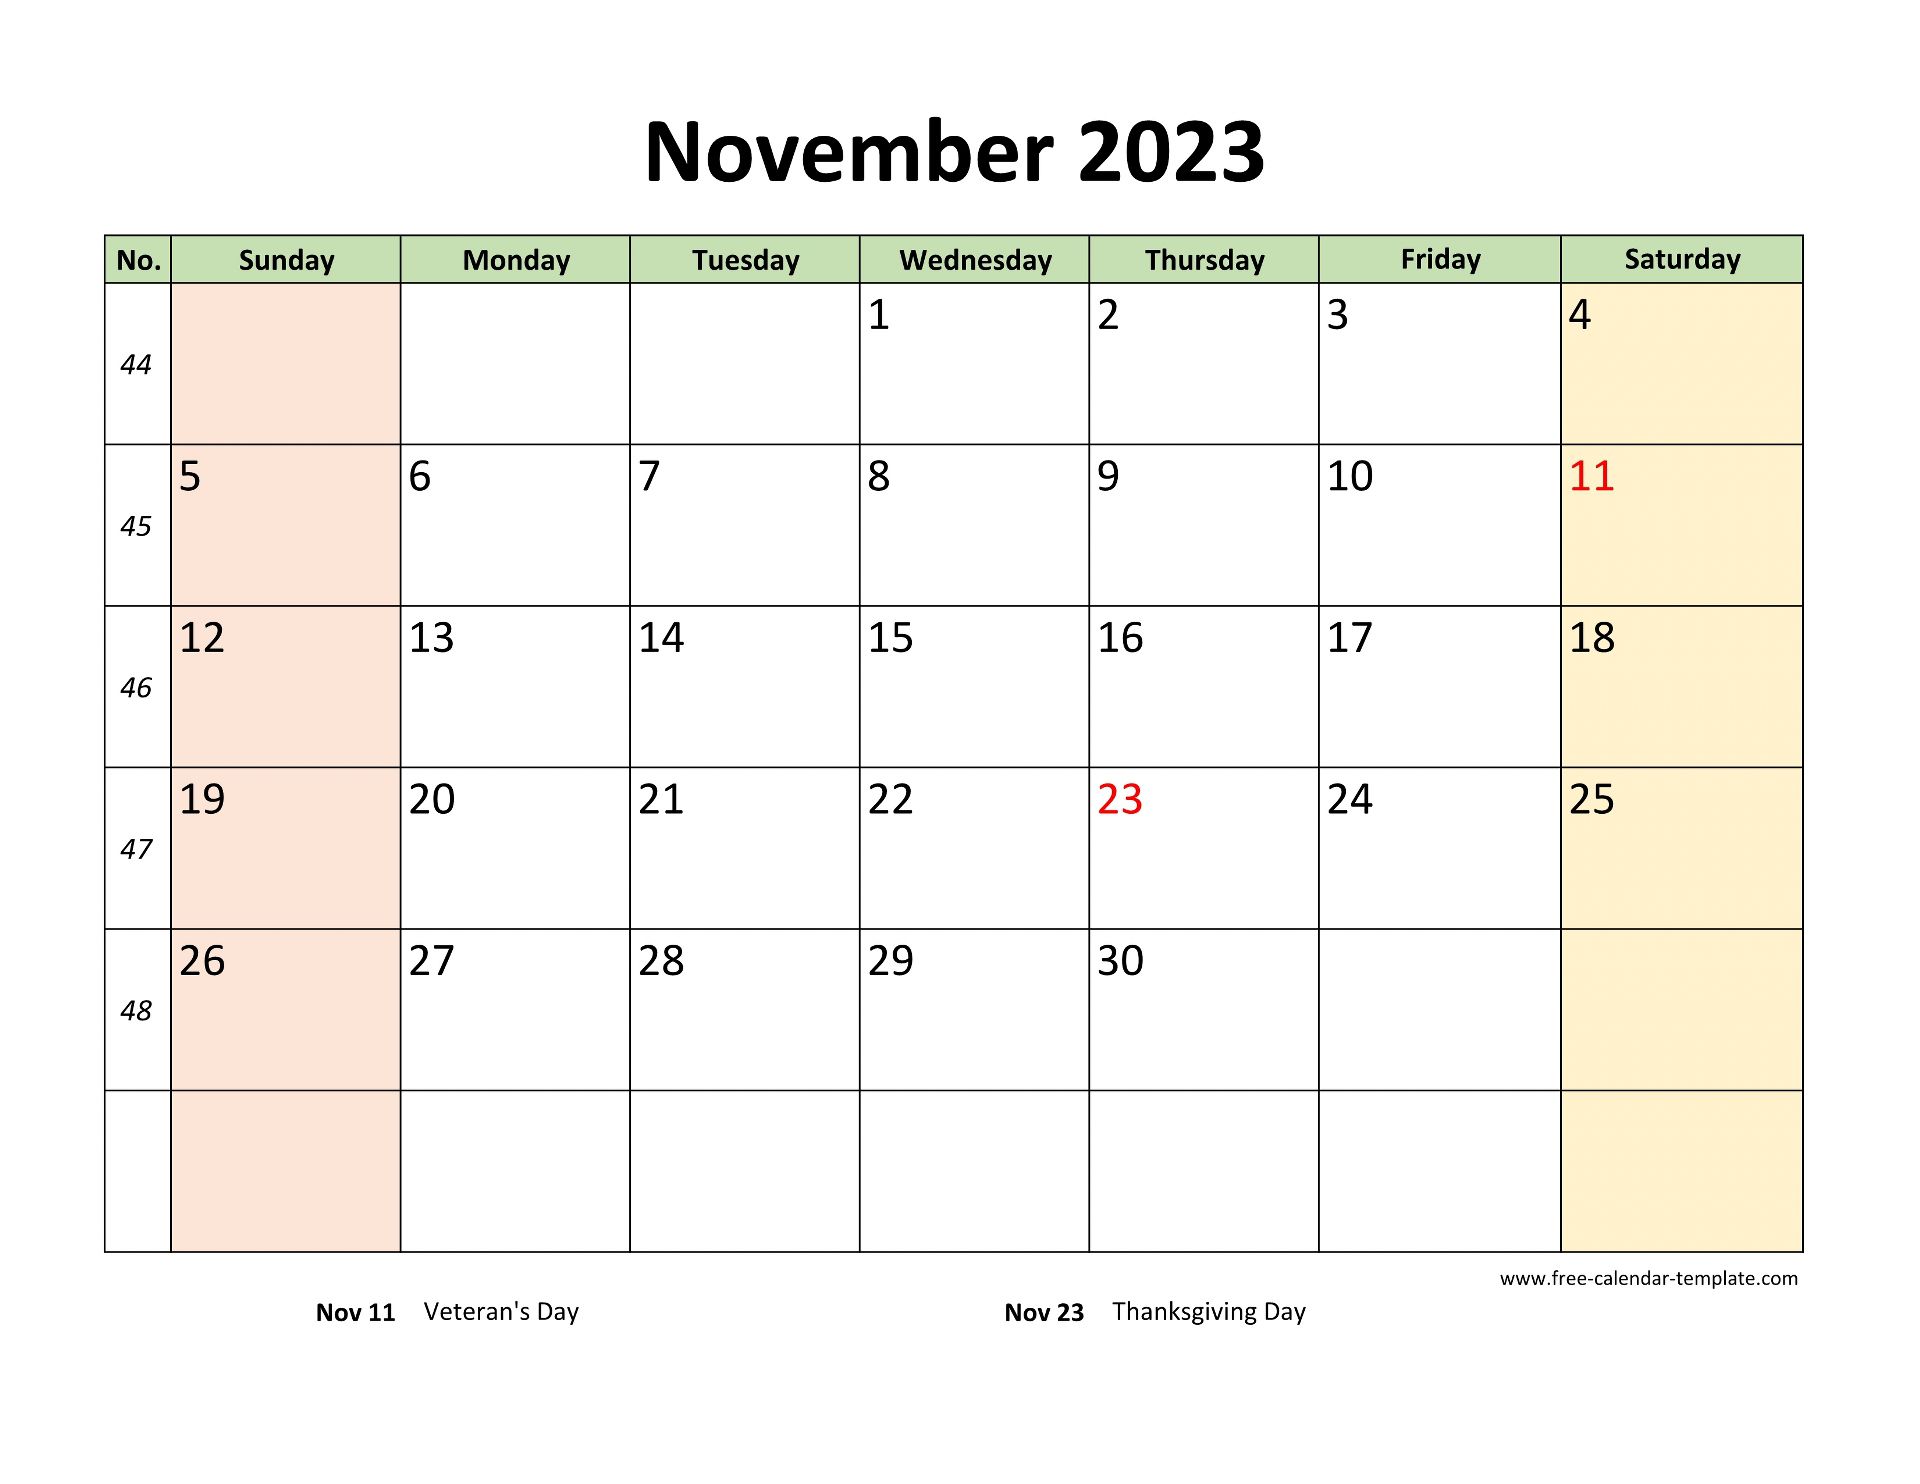 november-2023-free-calendar-tempplate-free-calendar-template